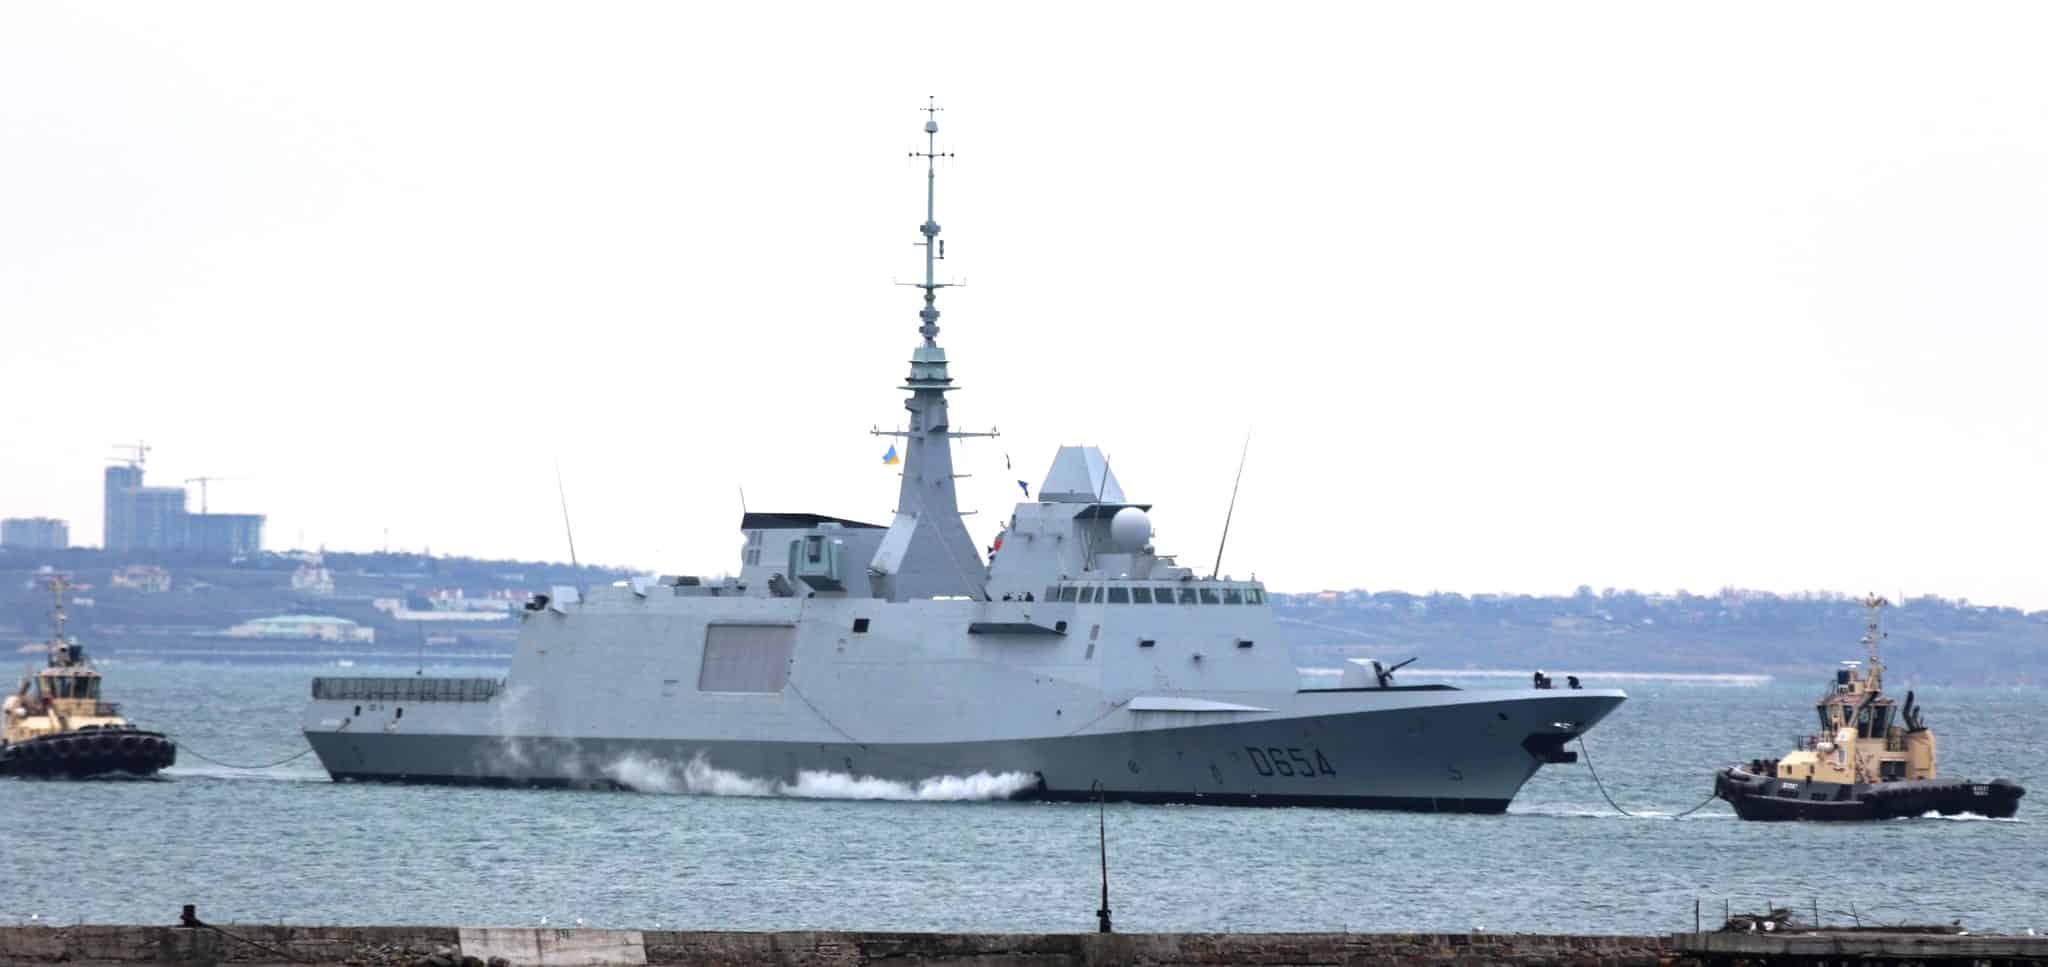 Фрегат Auvergne флоту Франції класу Aquitaine в порту Одеси. Грудень 2021. Фото: ВМС України